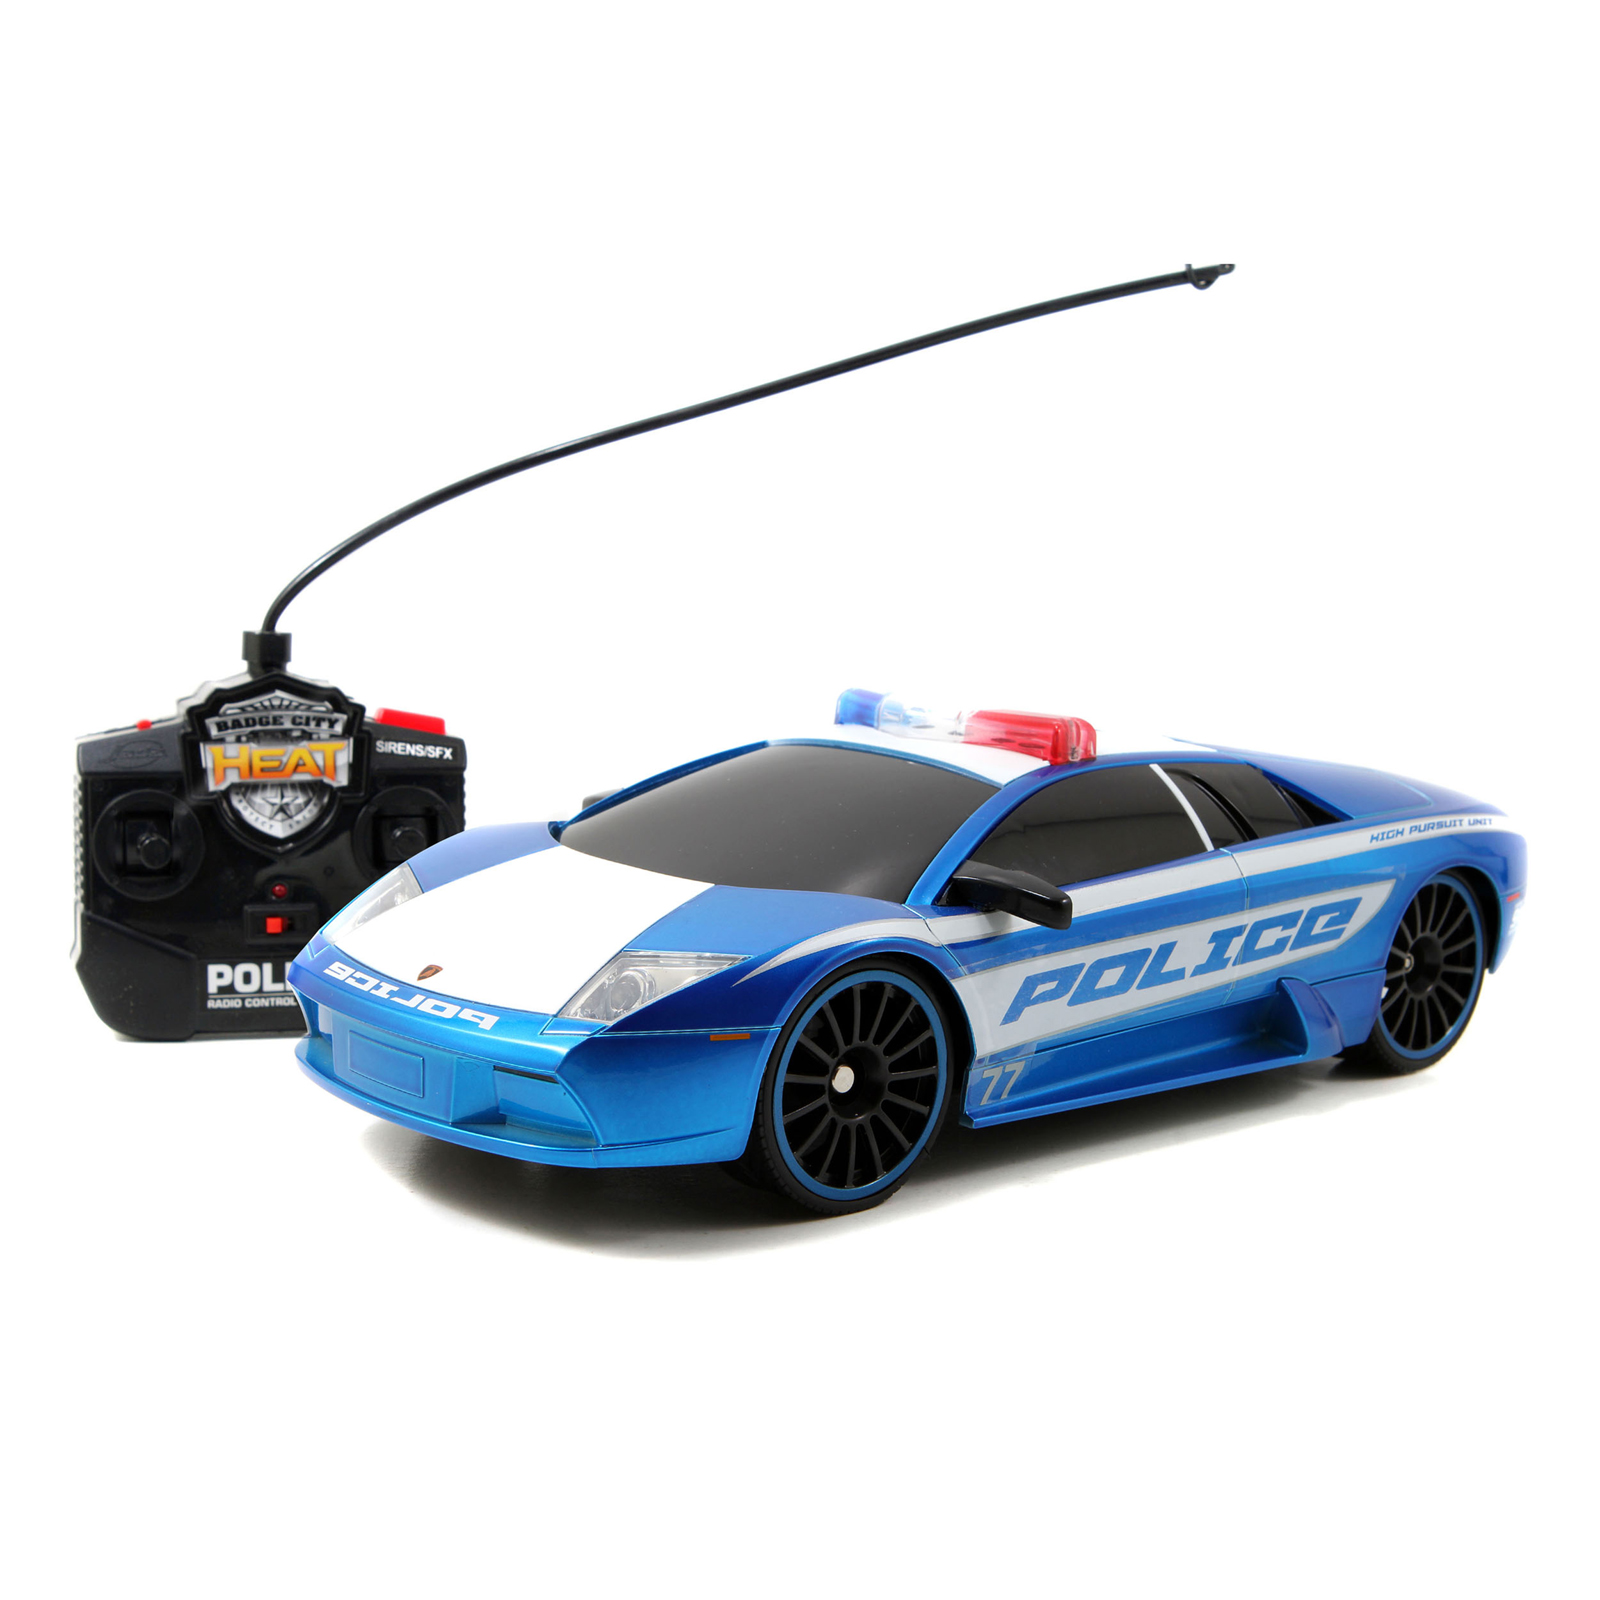 Heat 1:16 Lamborghini Murcelago Remote Control Car with Lights and Sound